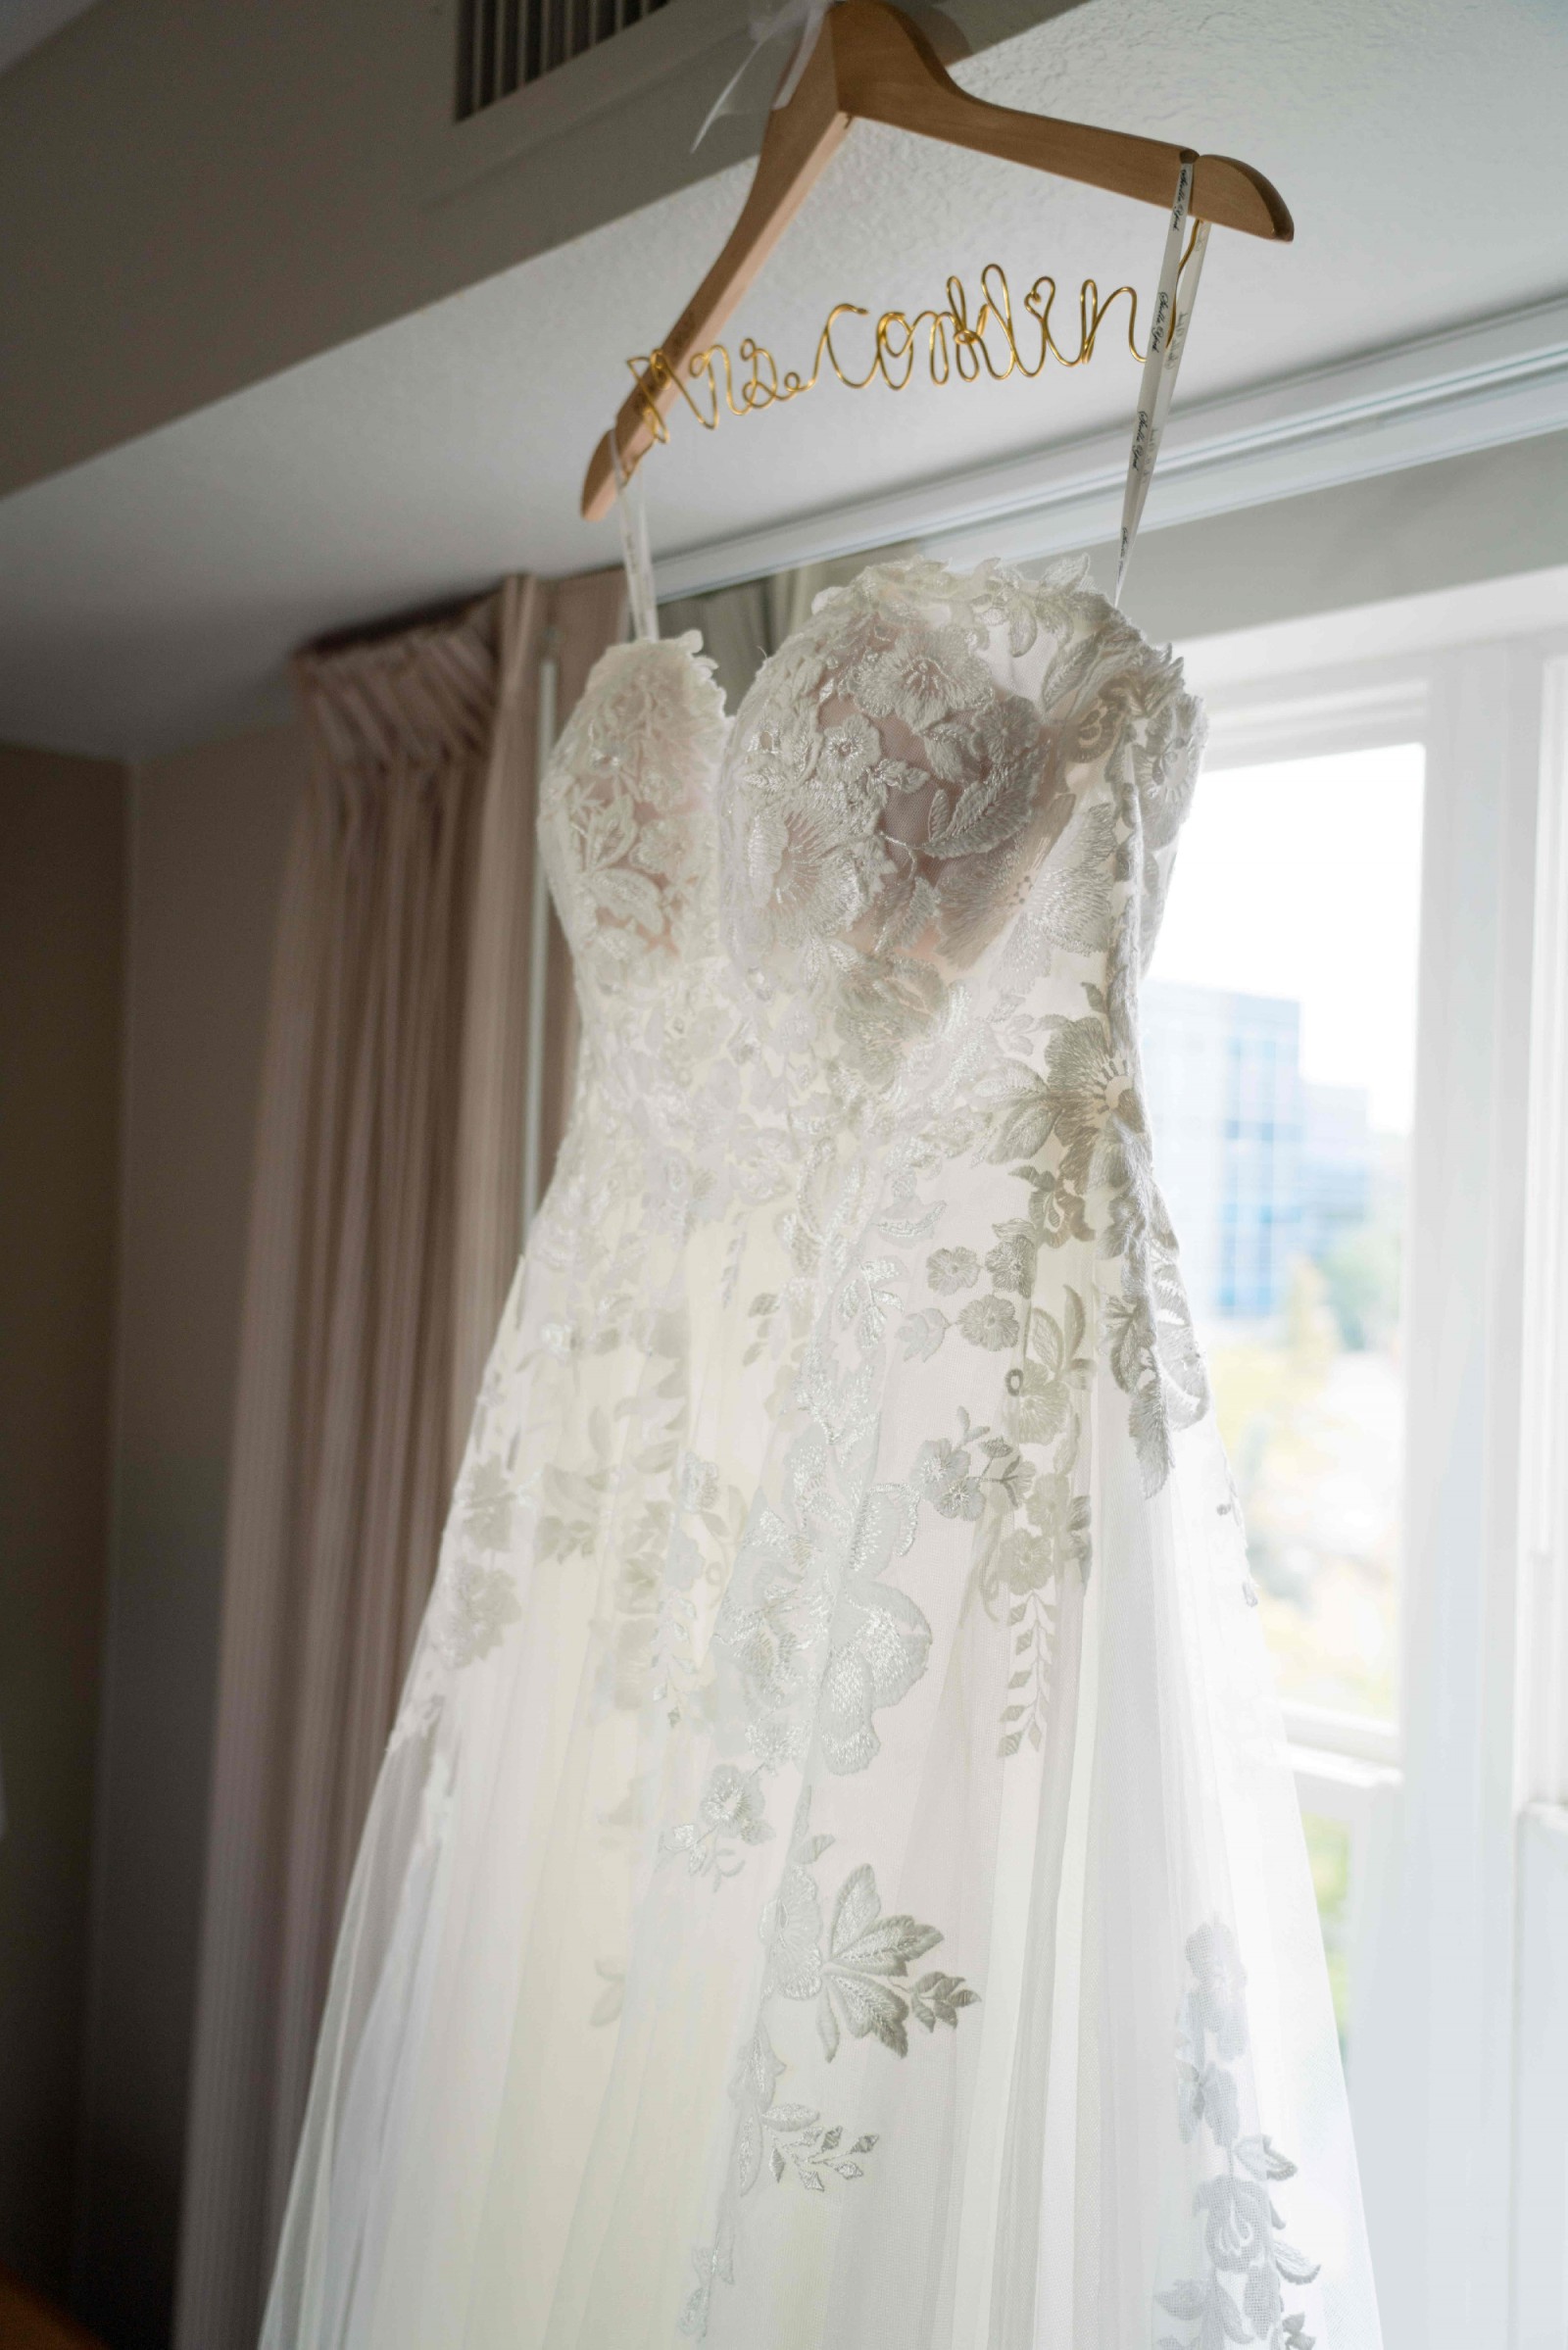 Stella York 7293 Sample Wedding Dress Save 60% - Stillwhite